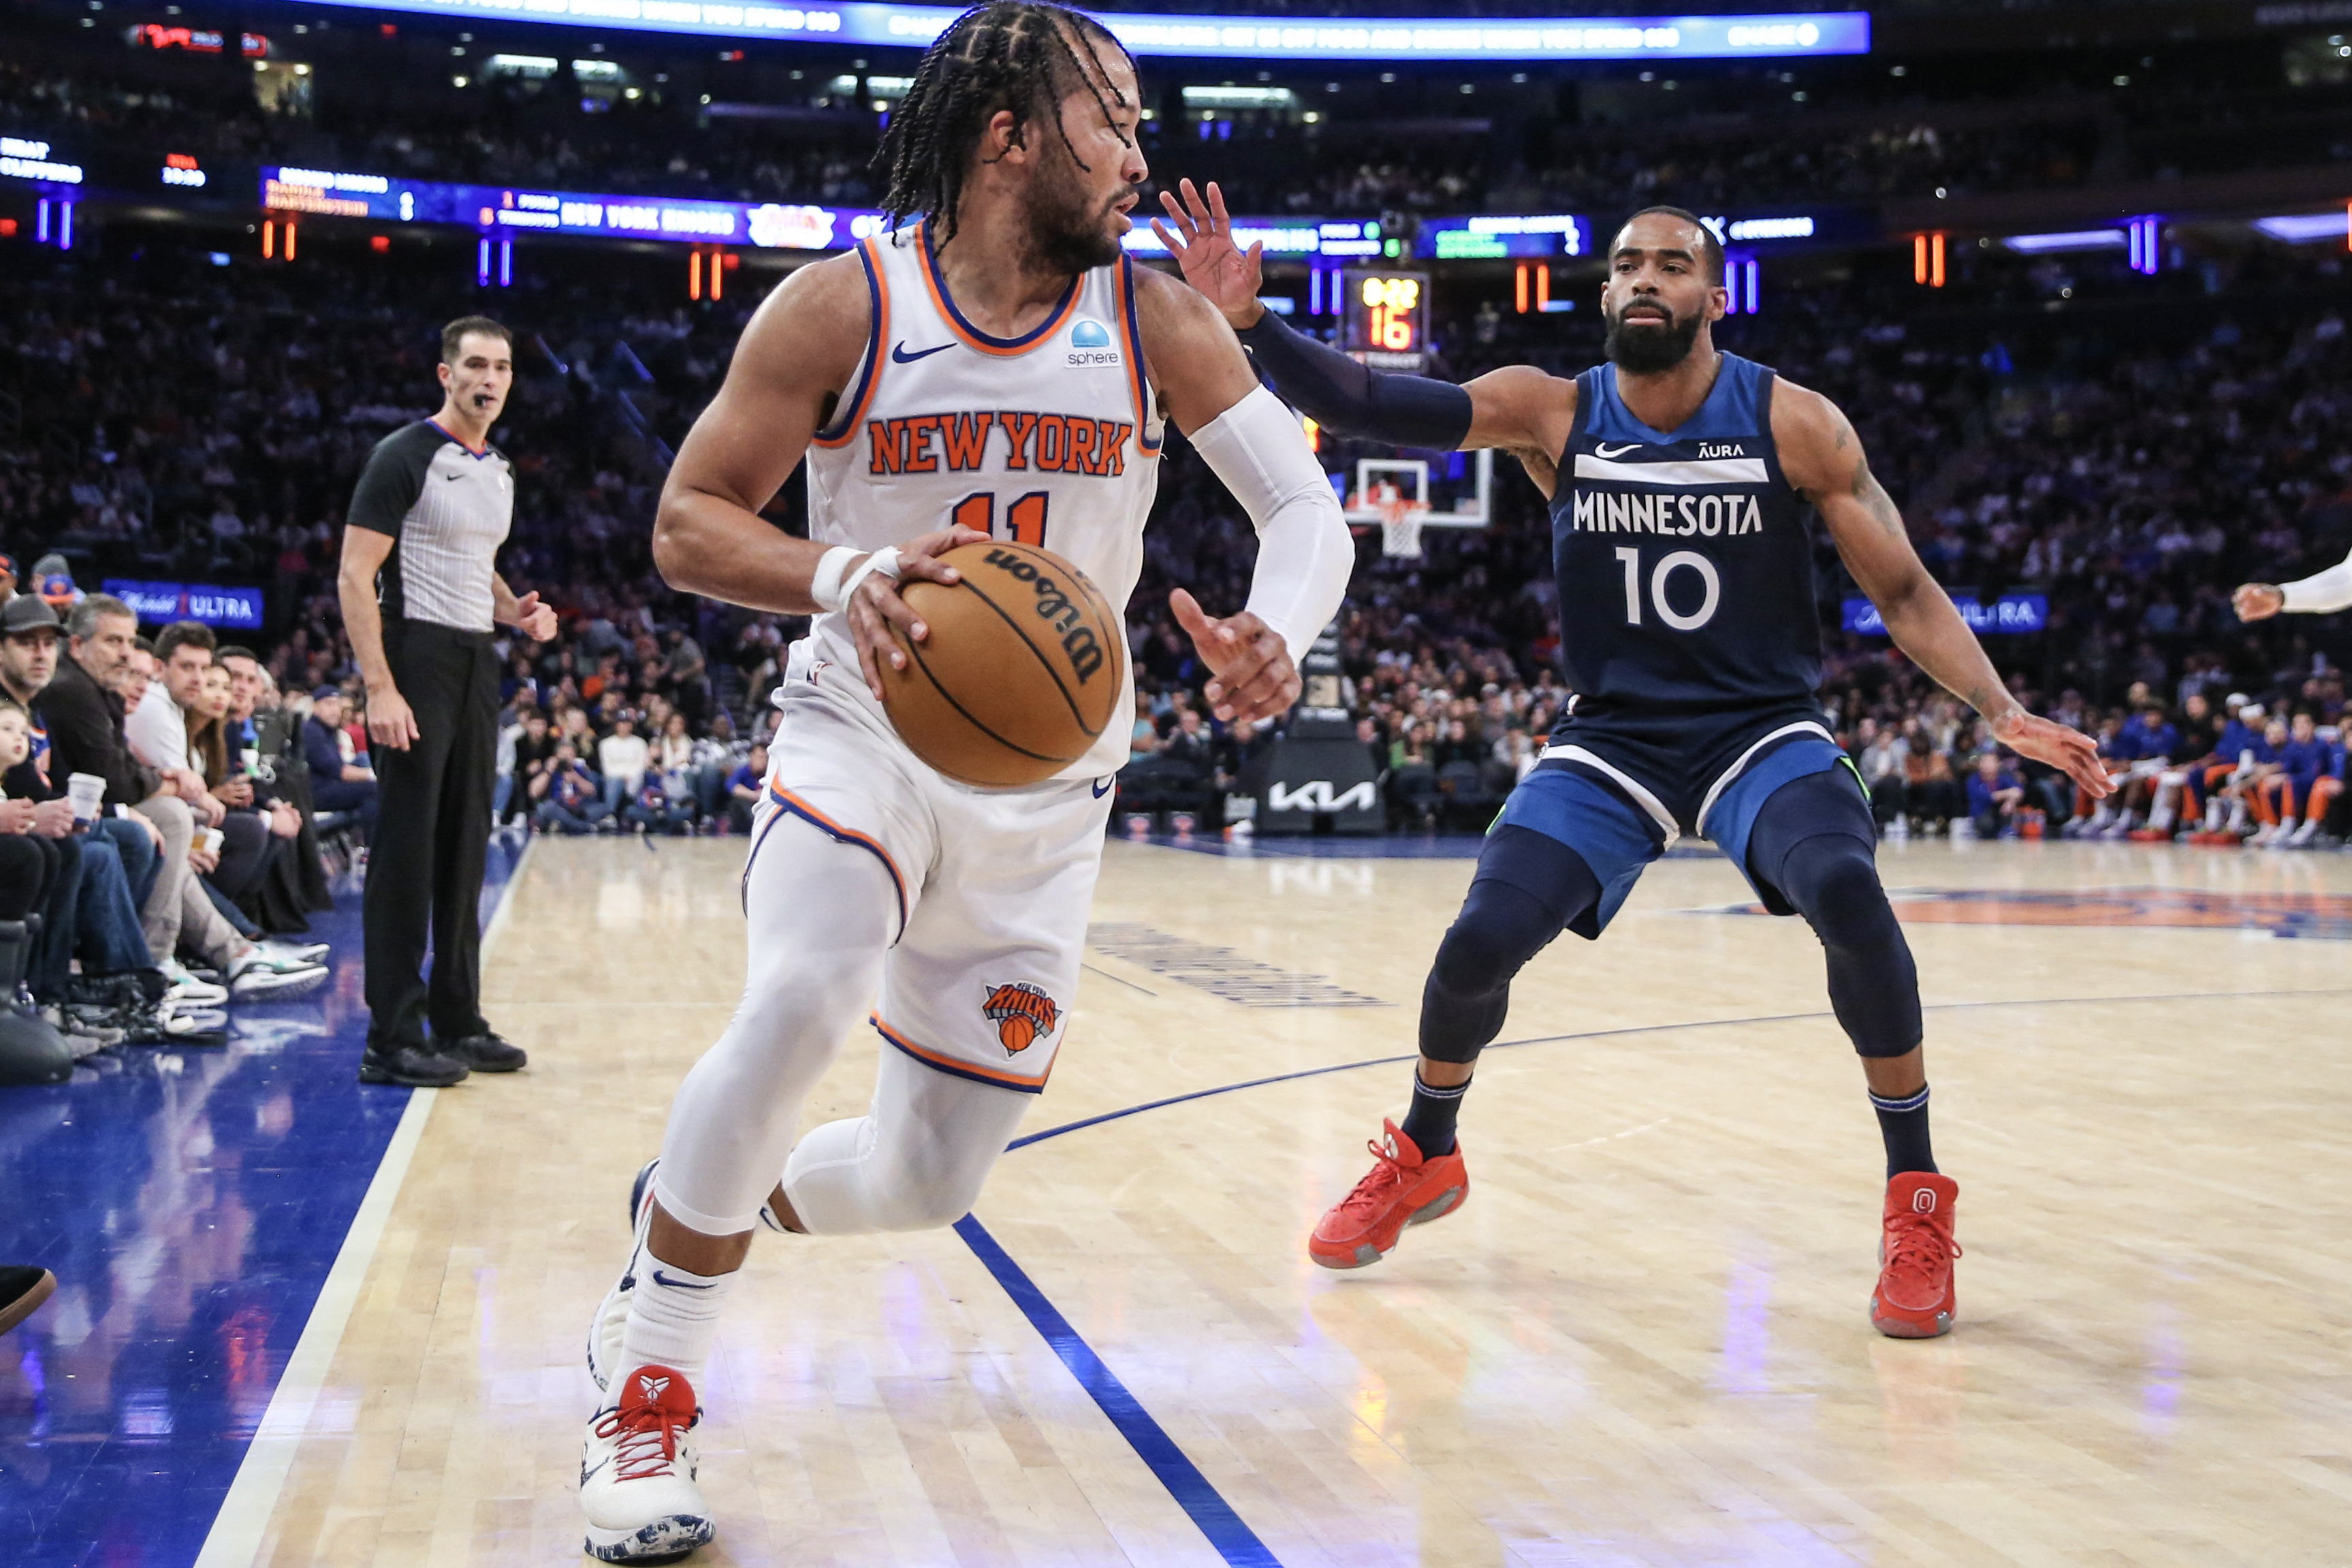 Julius Randle hangs 39 on Timberwolves as Knicks snap 3-game skid